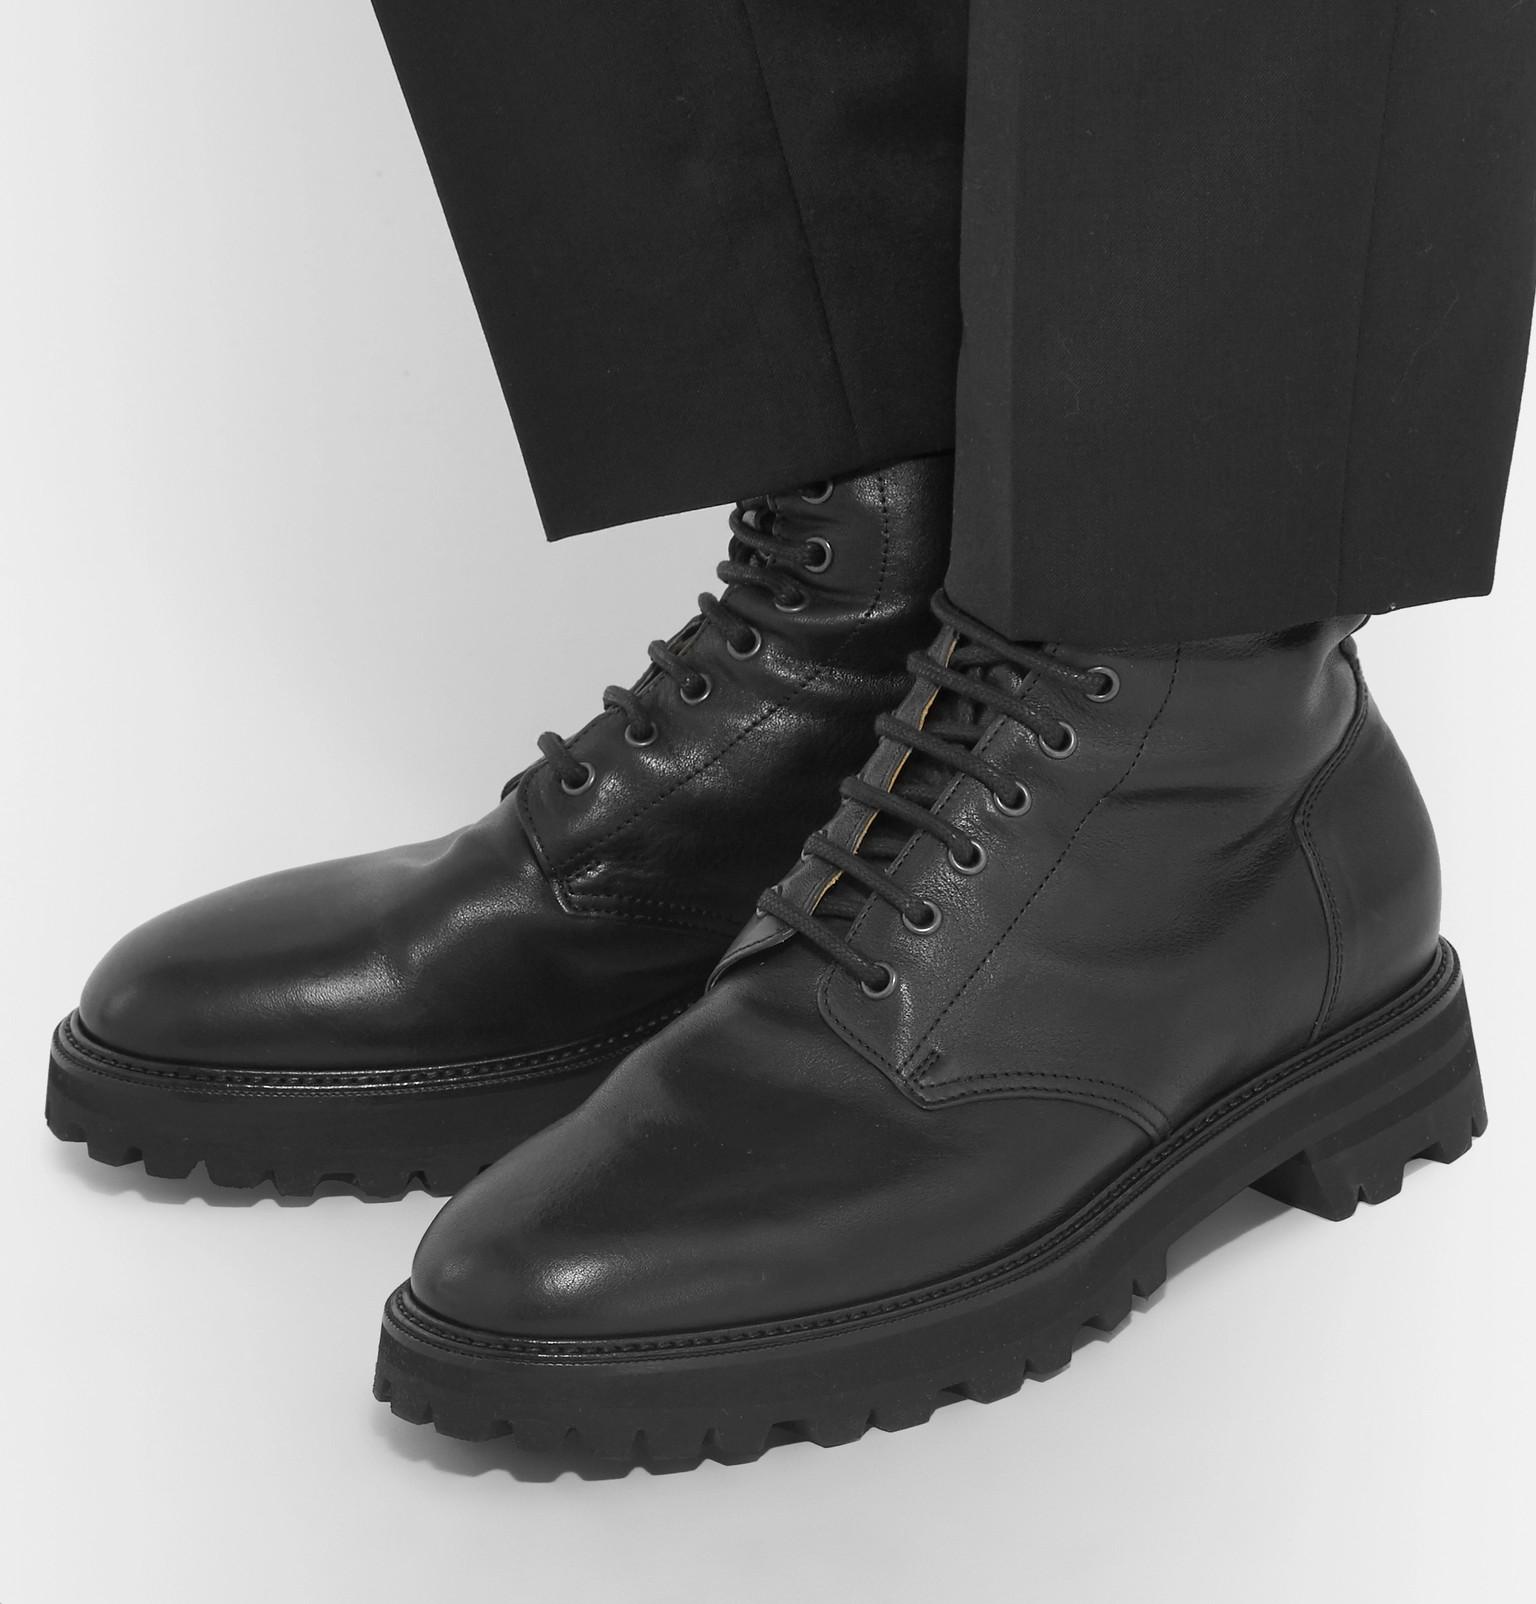 Maison Margiela Leather Combat Boots in Black for Men - Lyst